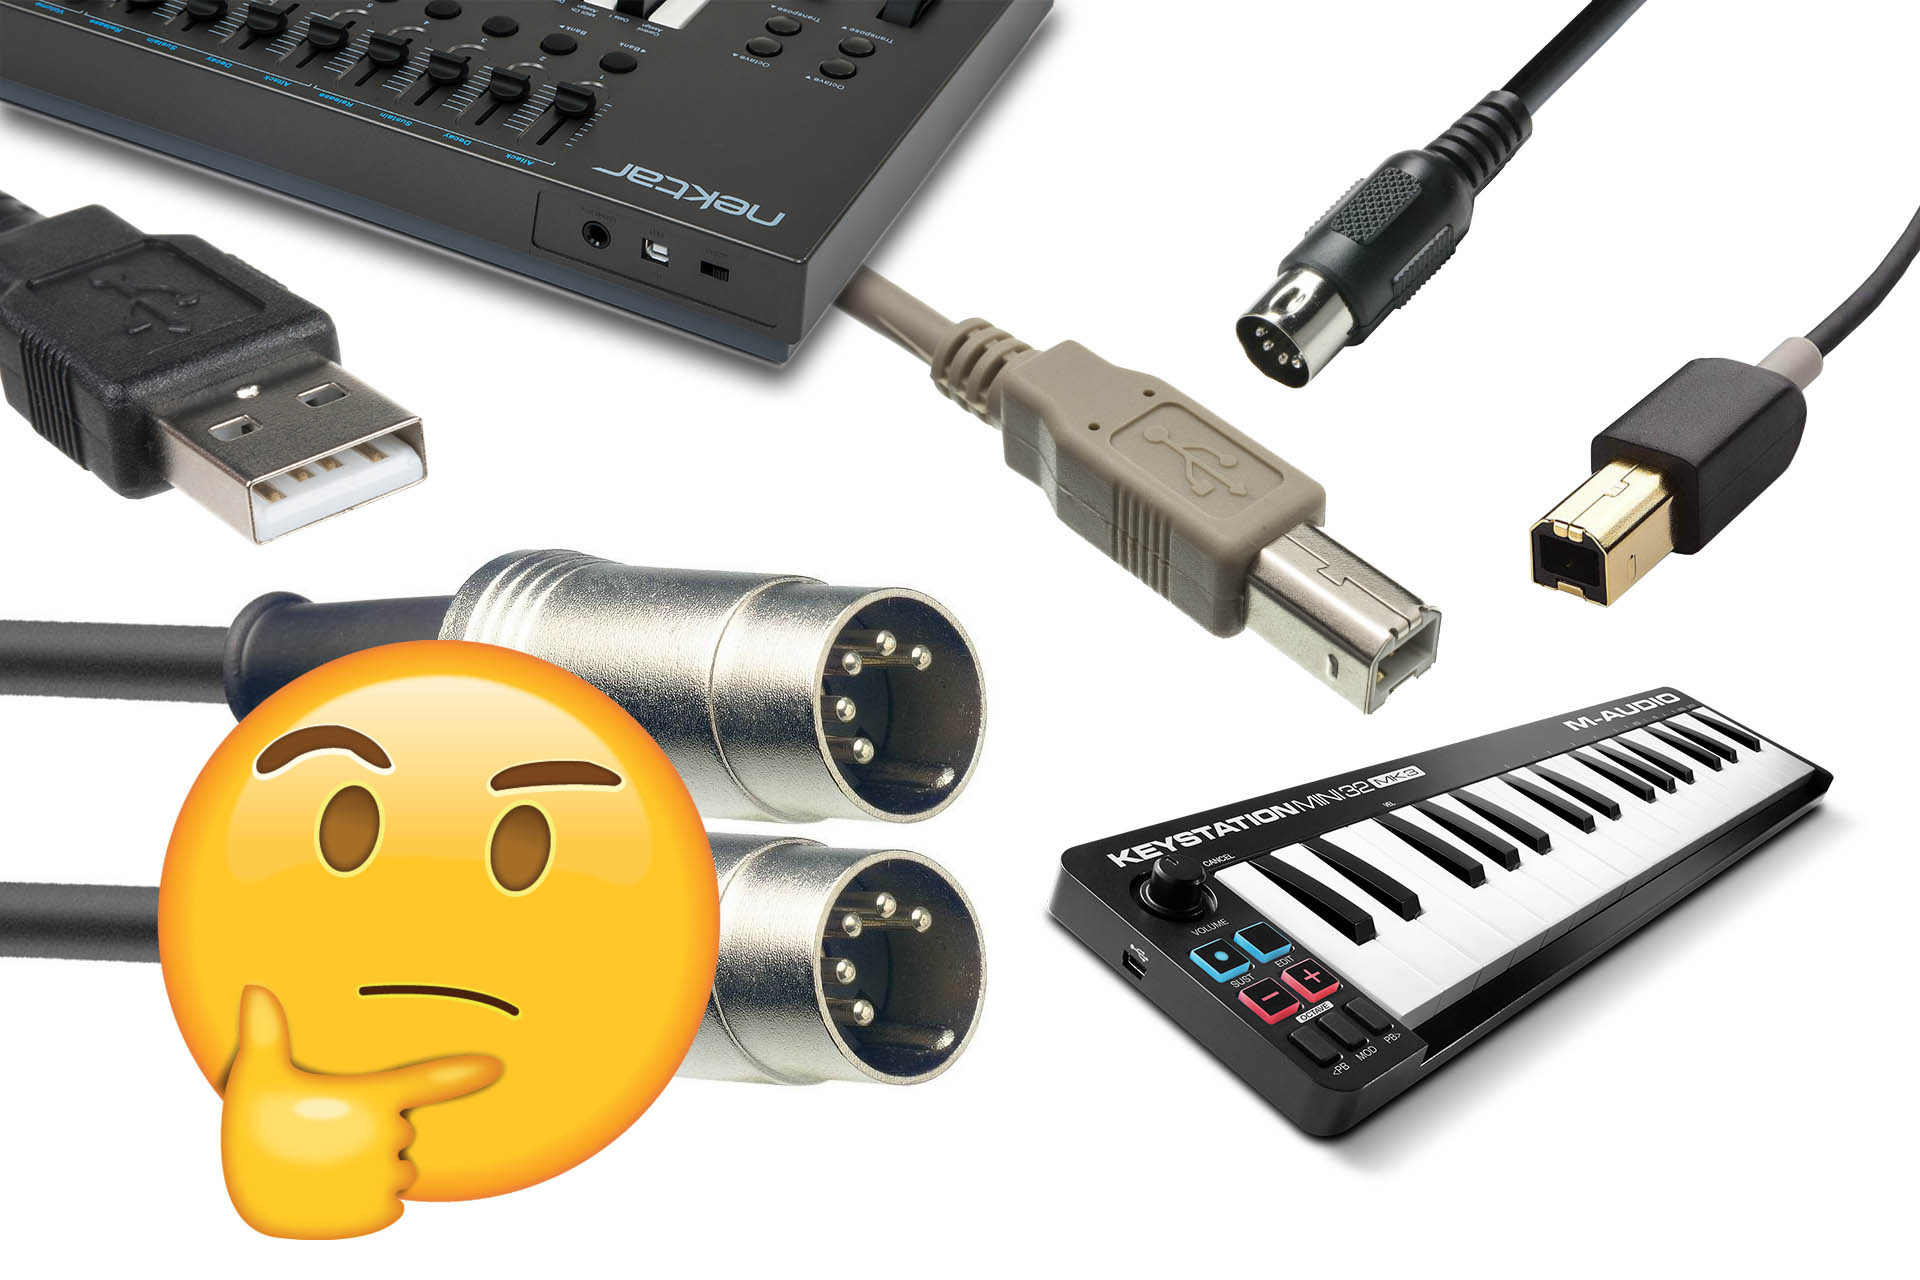 USB MIDI Keyboard to MIDI Hardware How To